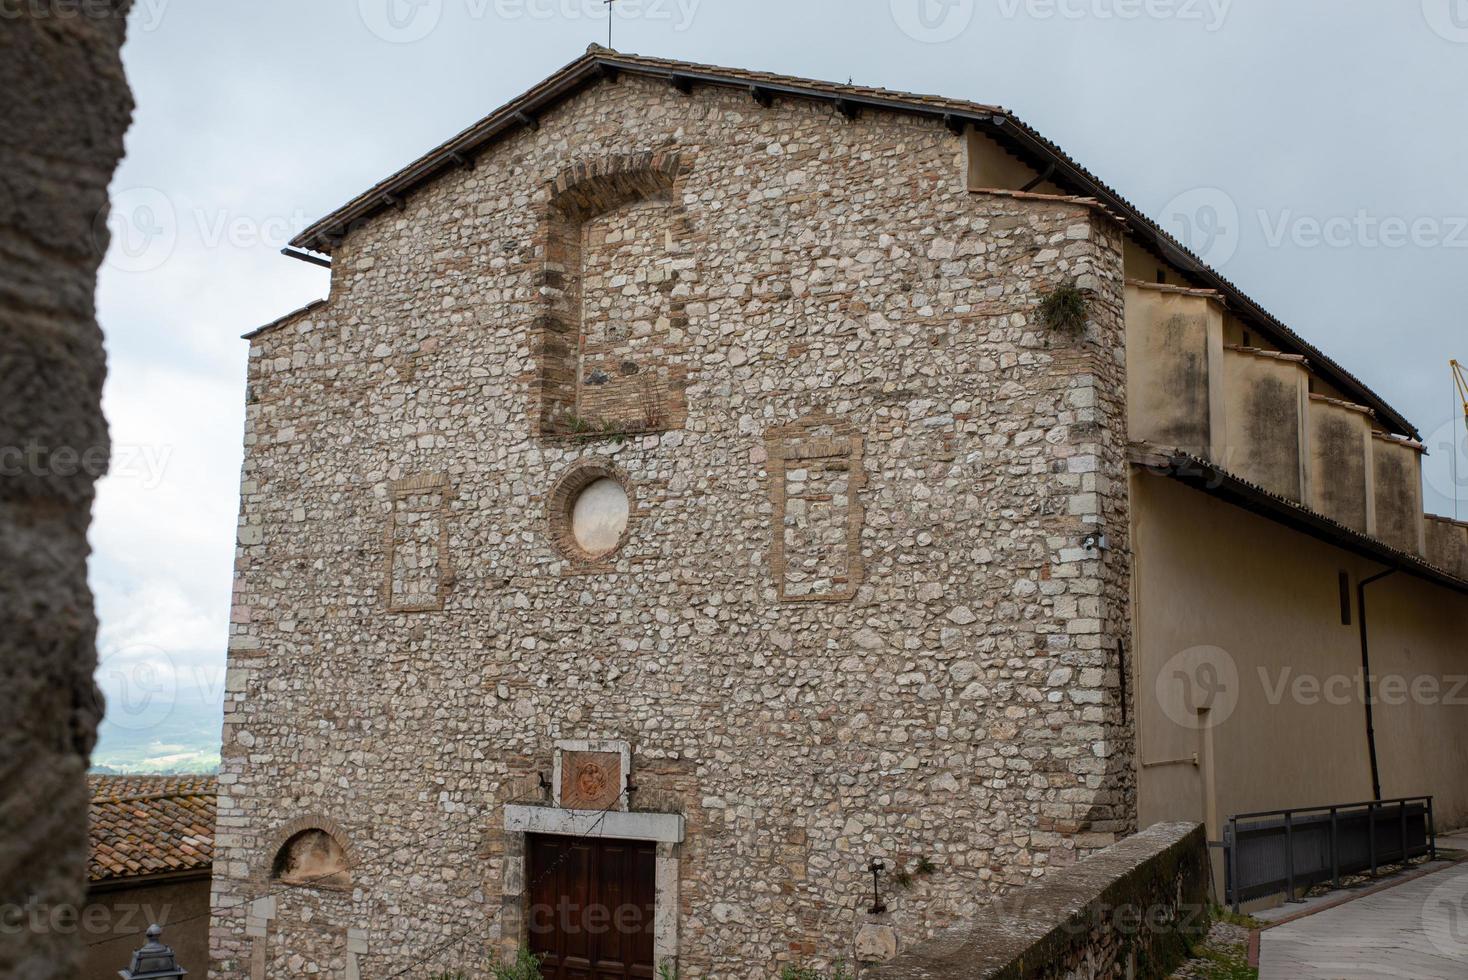 byggnader i cesi, i Terni-provinsen, Italien, 2020 foto